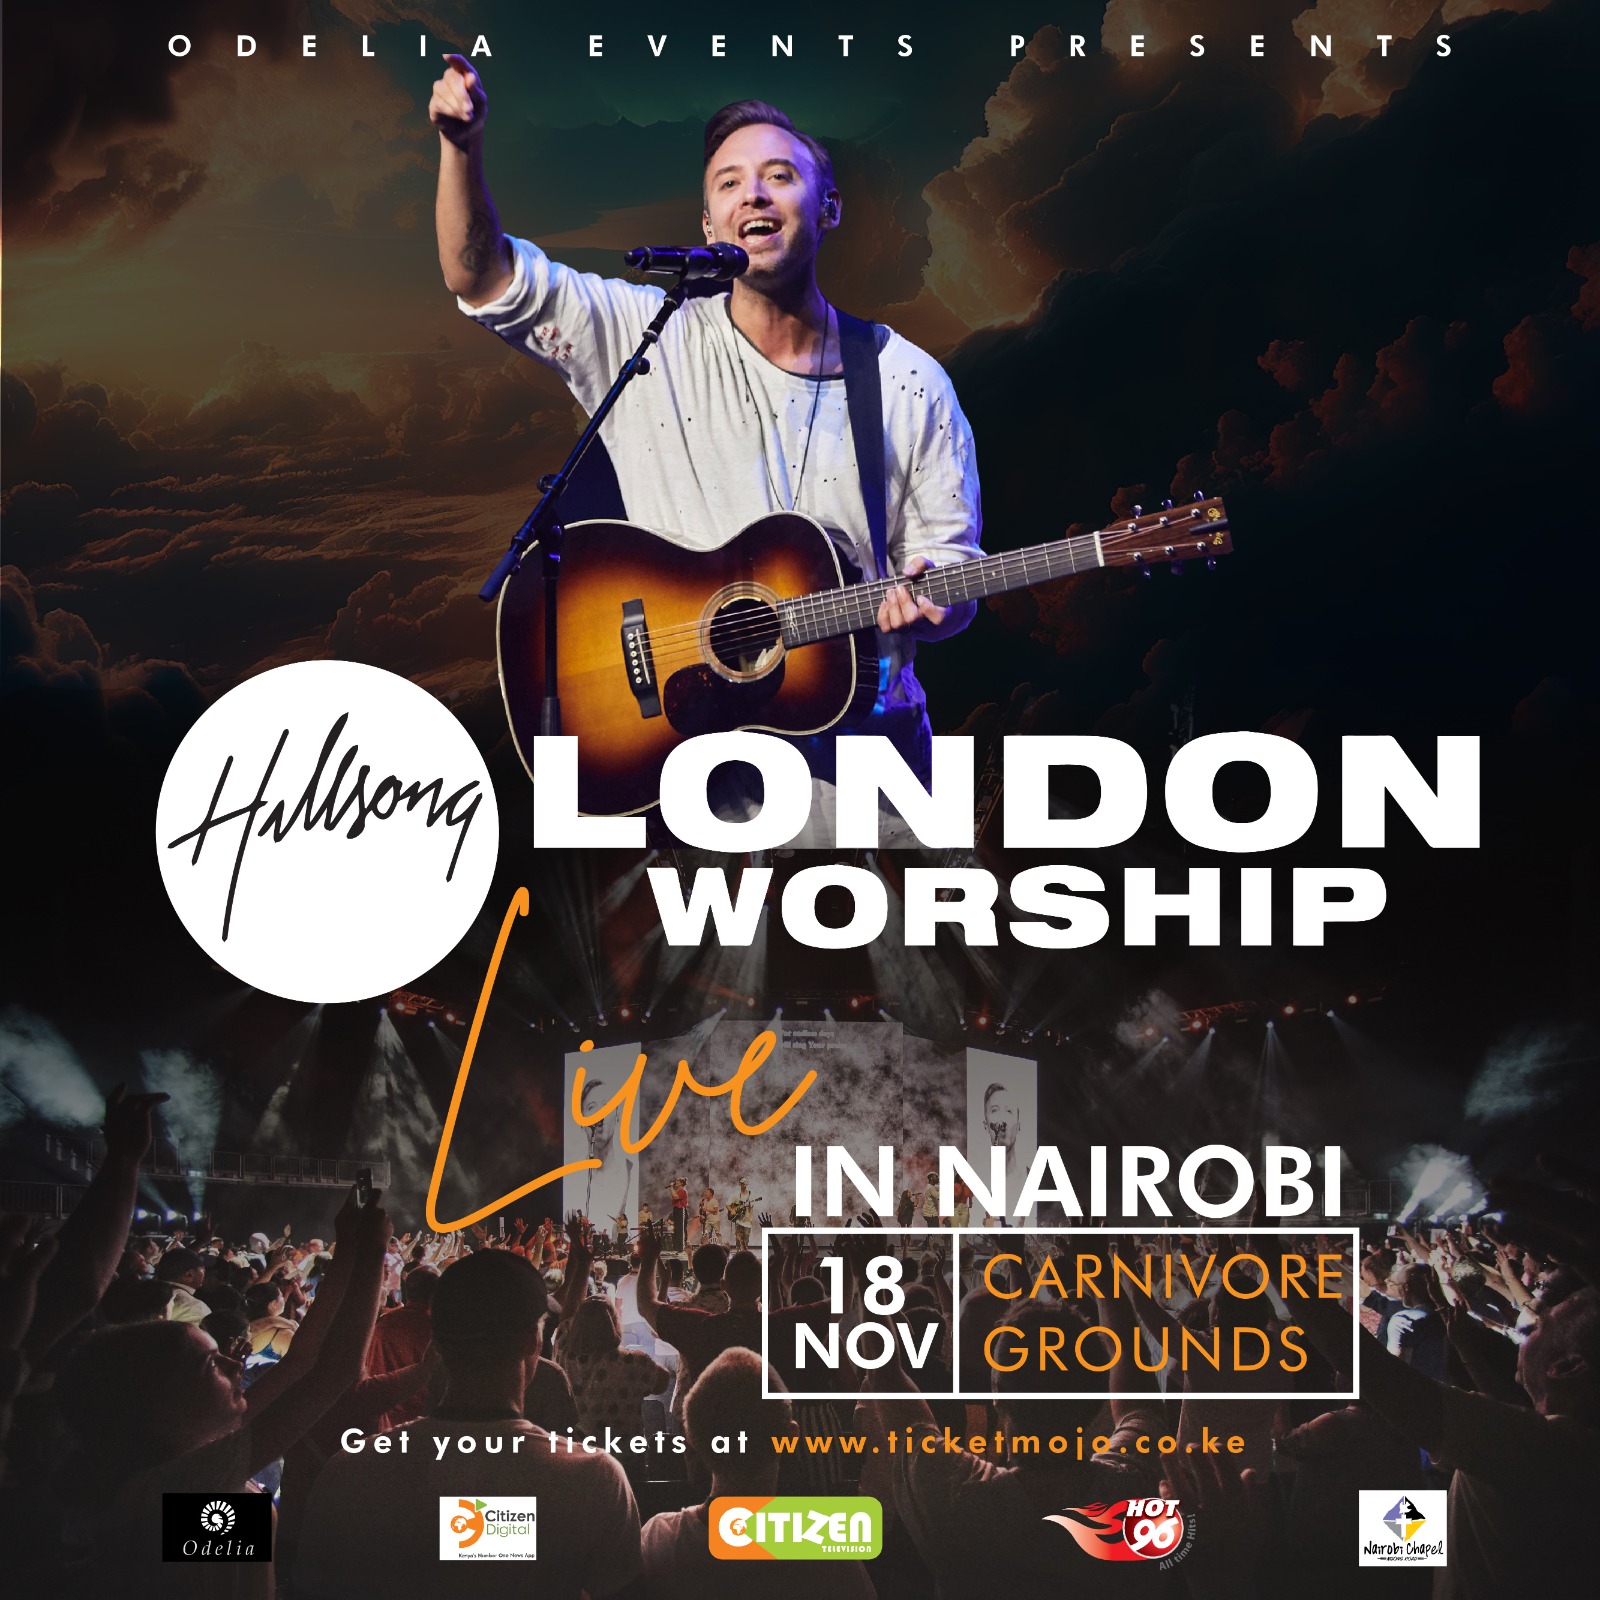 Hillsong London Worship arrive in Nairobi ahead of concert